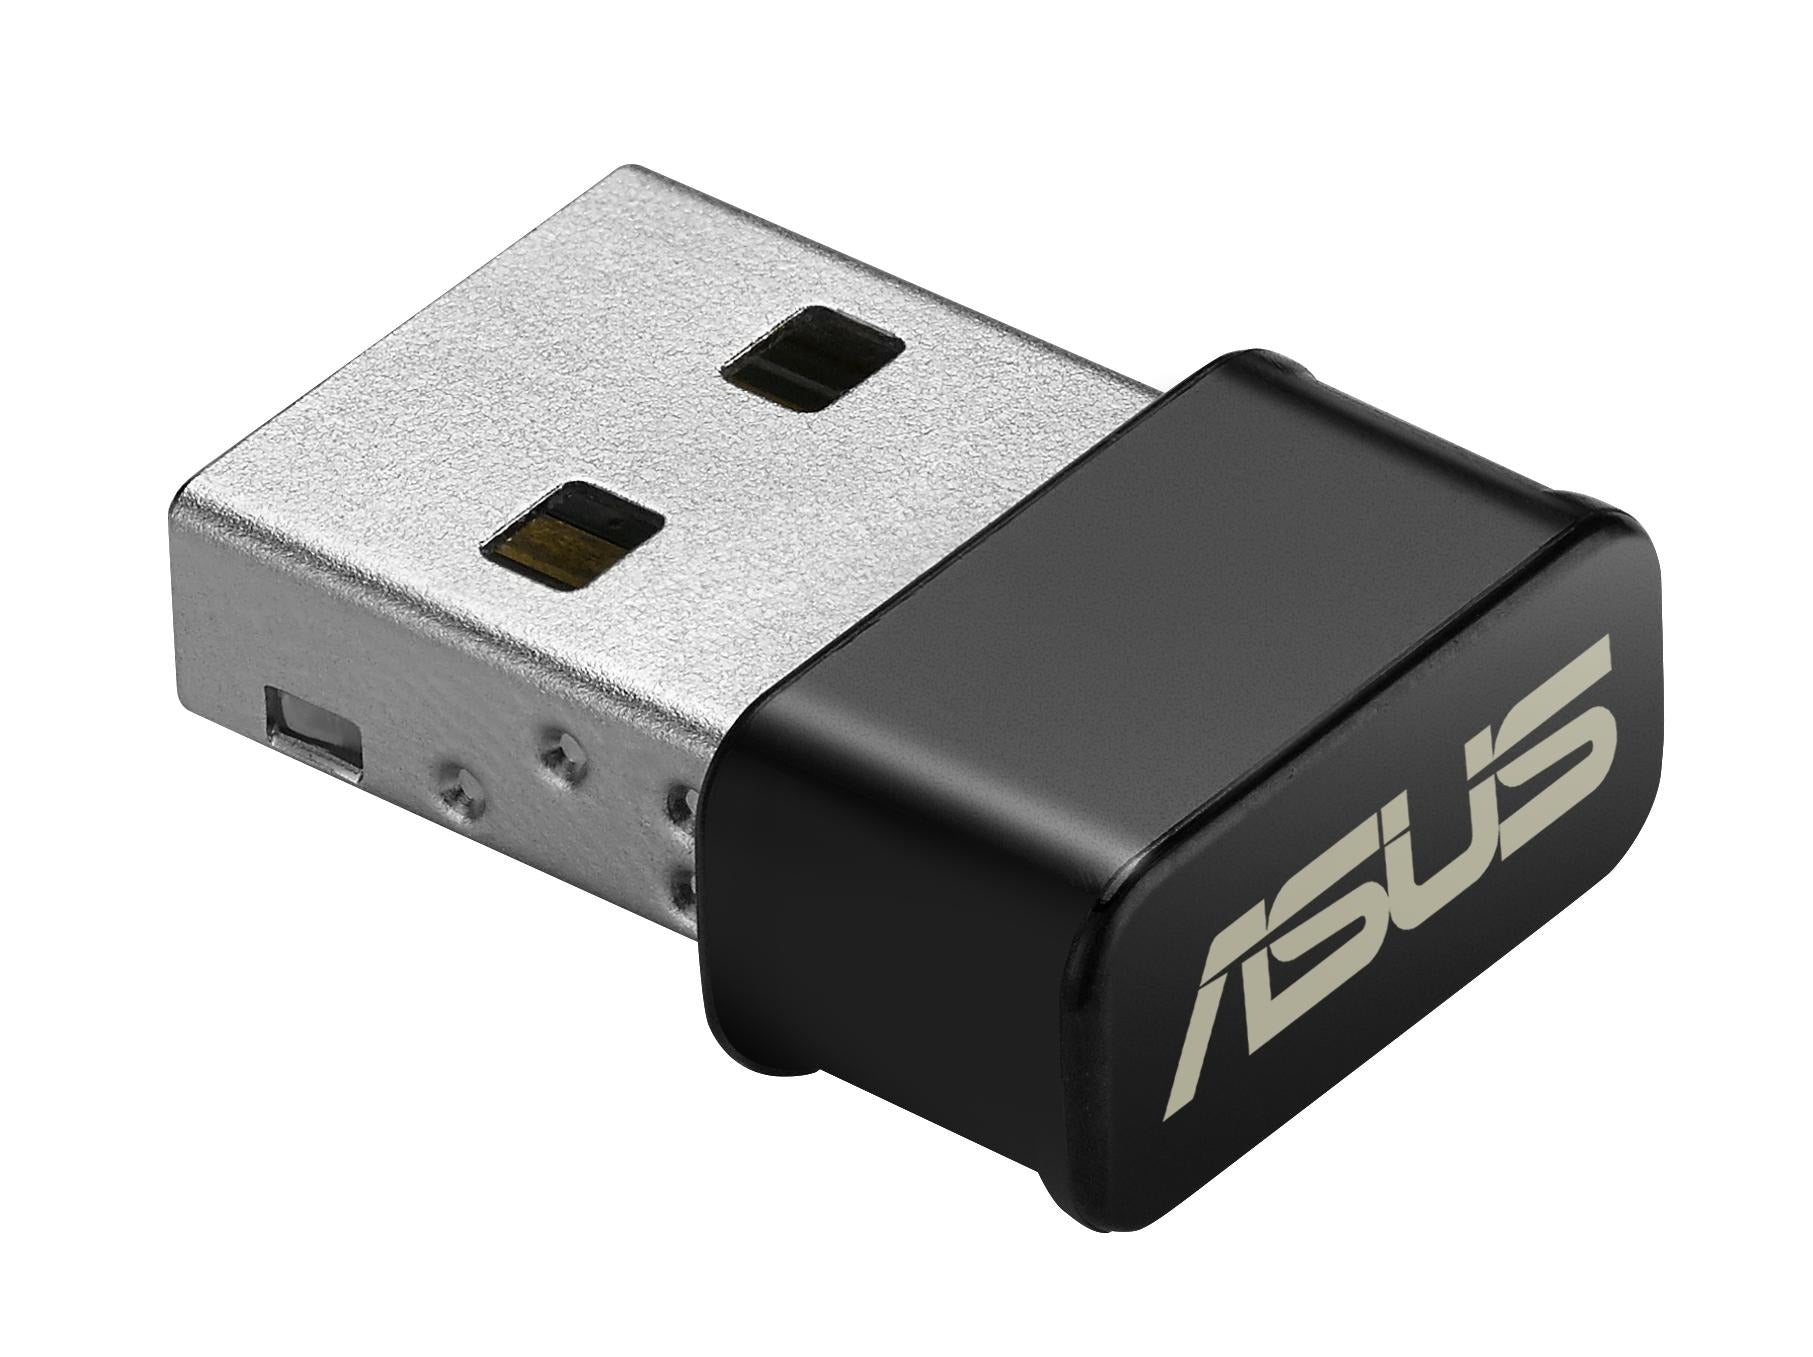 Asus USB-AC53 Nano Dual Band USB Nano Wireless Adapter